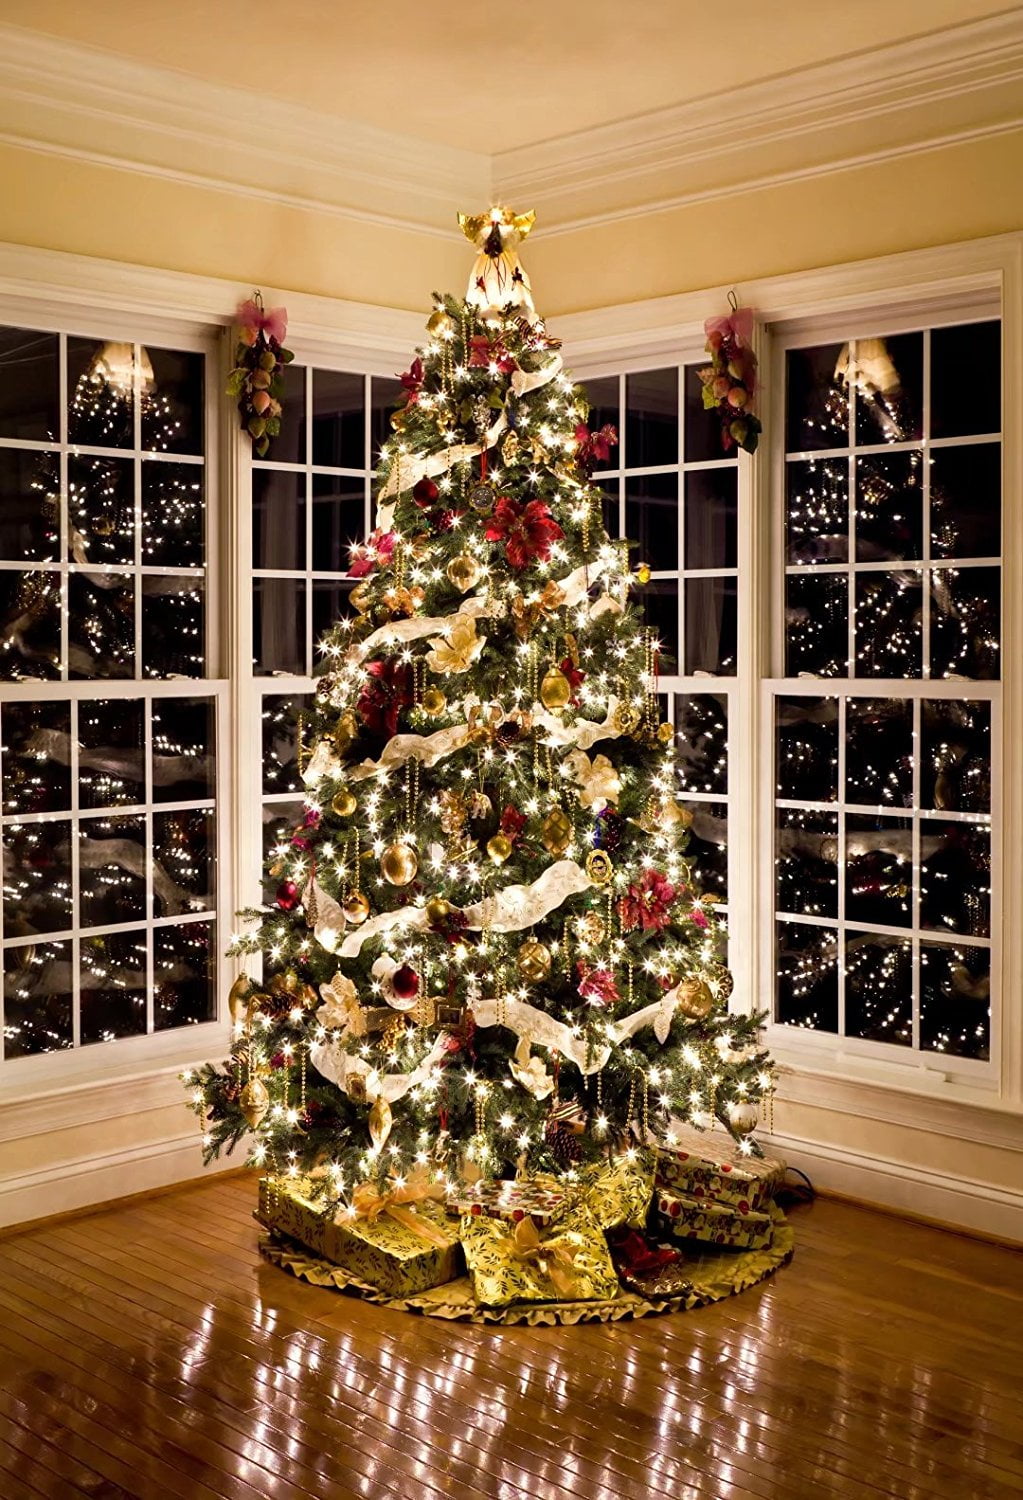 6.5X10FT-Happy Christmas Tree Gift Photography Backdrops Flags Wood Floor Photo Studio Background 